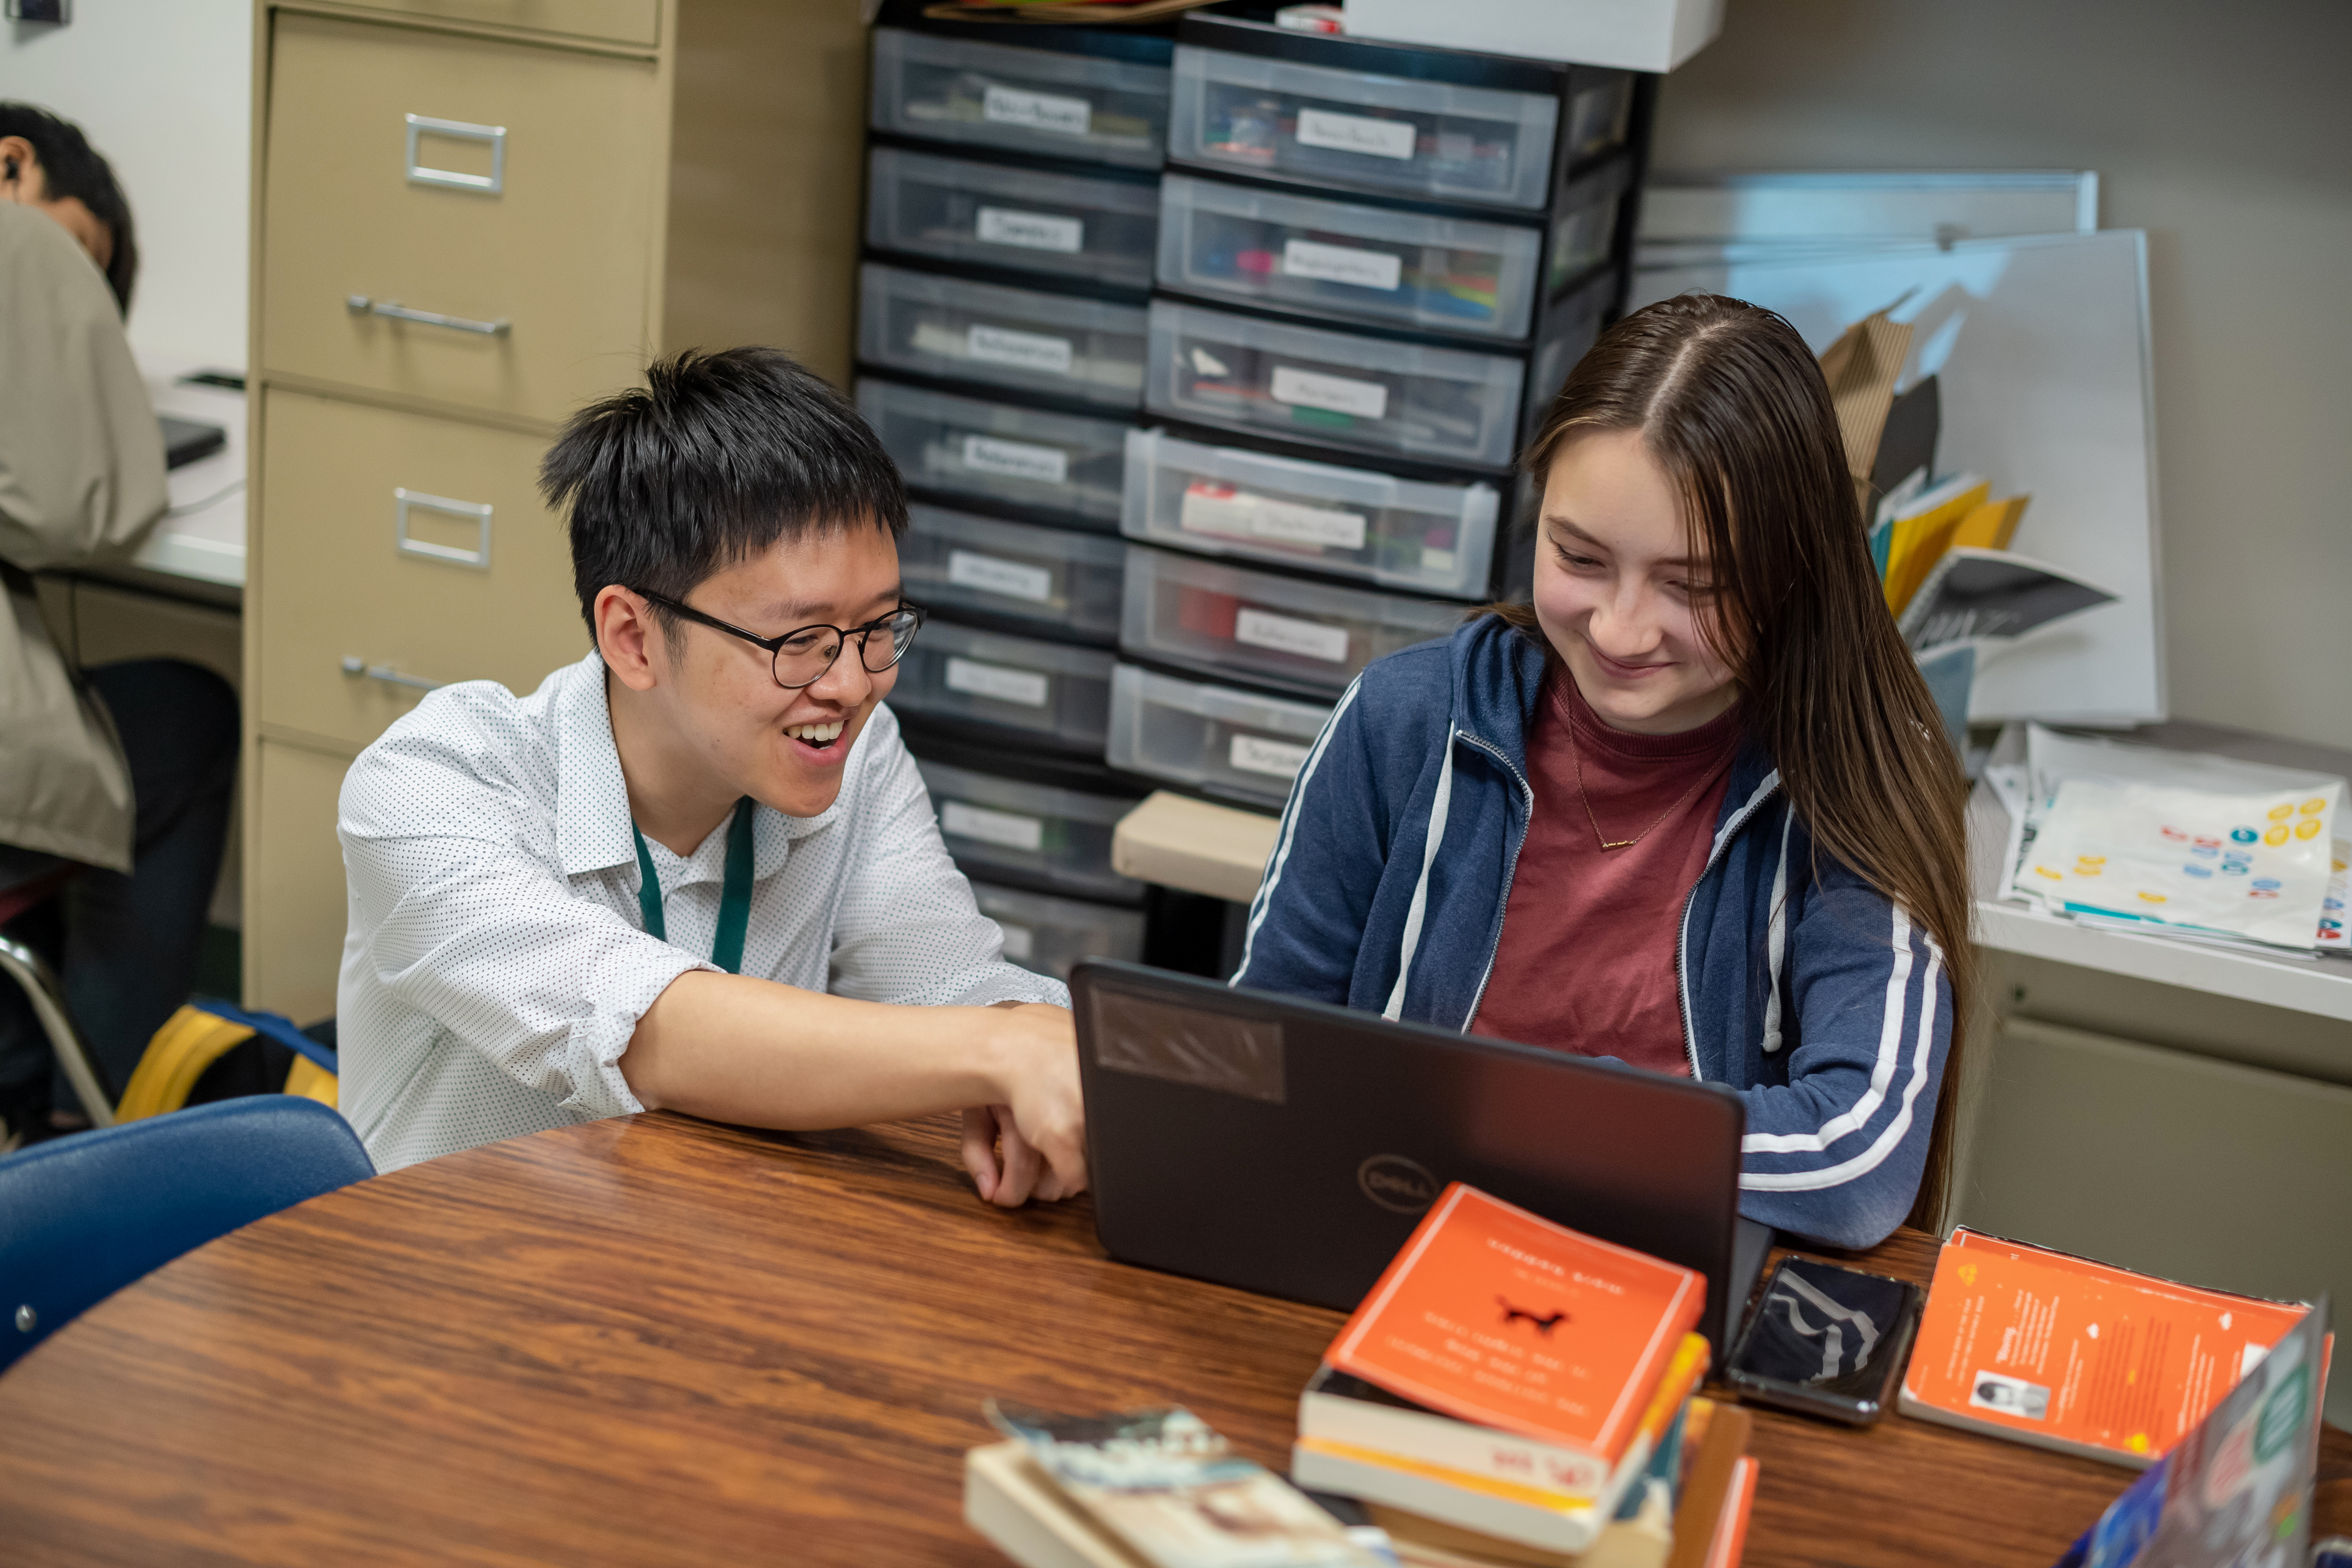 Nguyen assists a student on a laptop